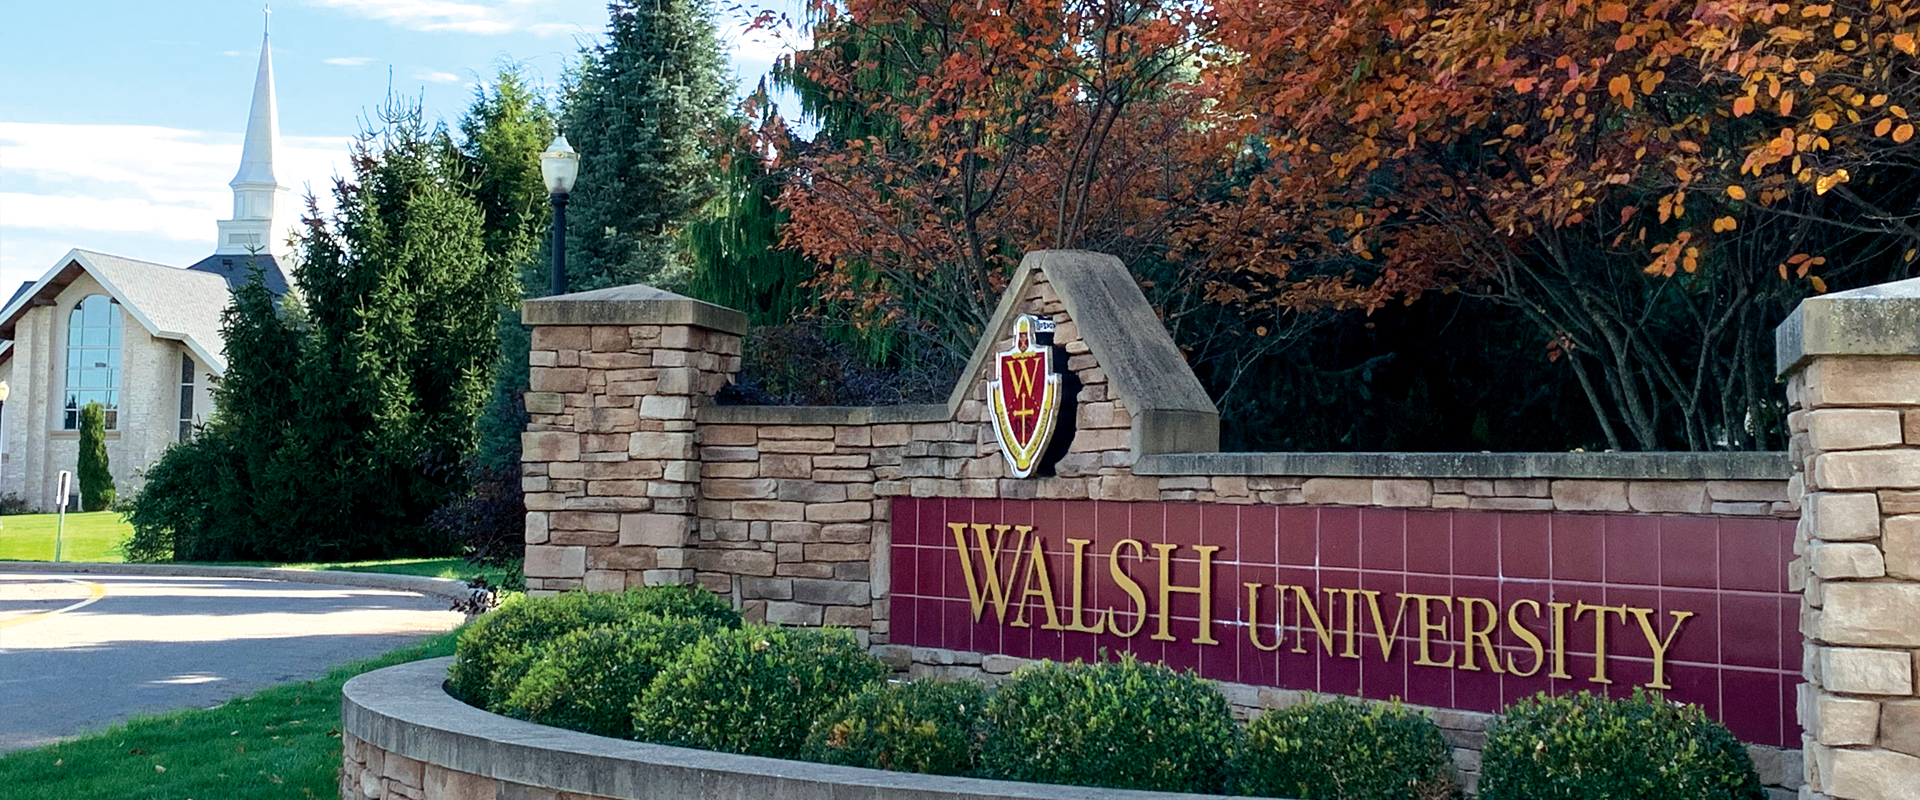 to Walsh University